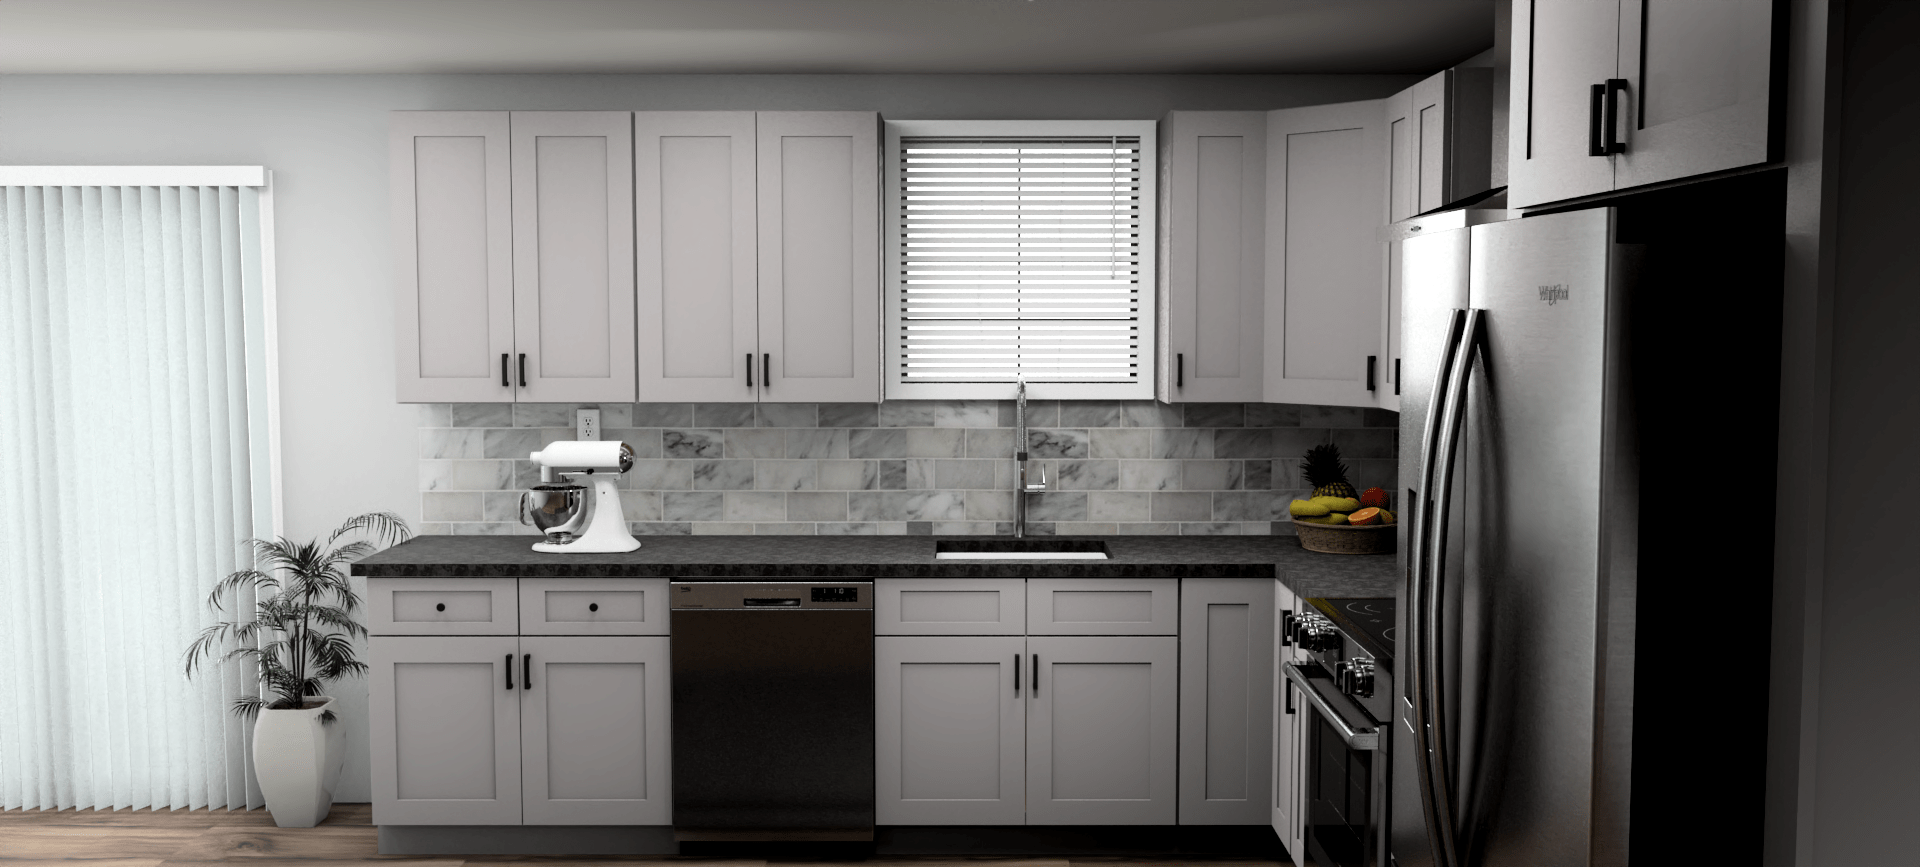 Fabuwood Allure Galaxy Nickel 11 x 12 L Shaped Kitchen Side Layout Photo